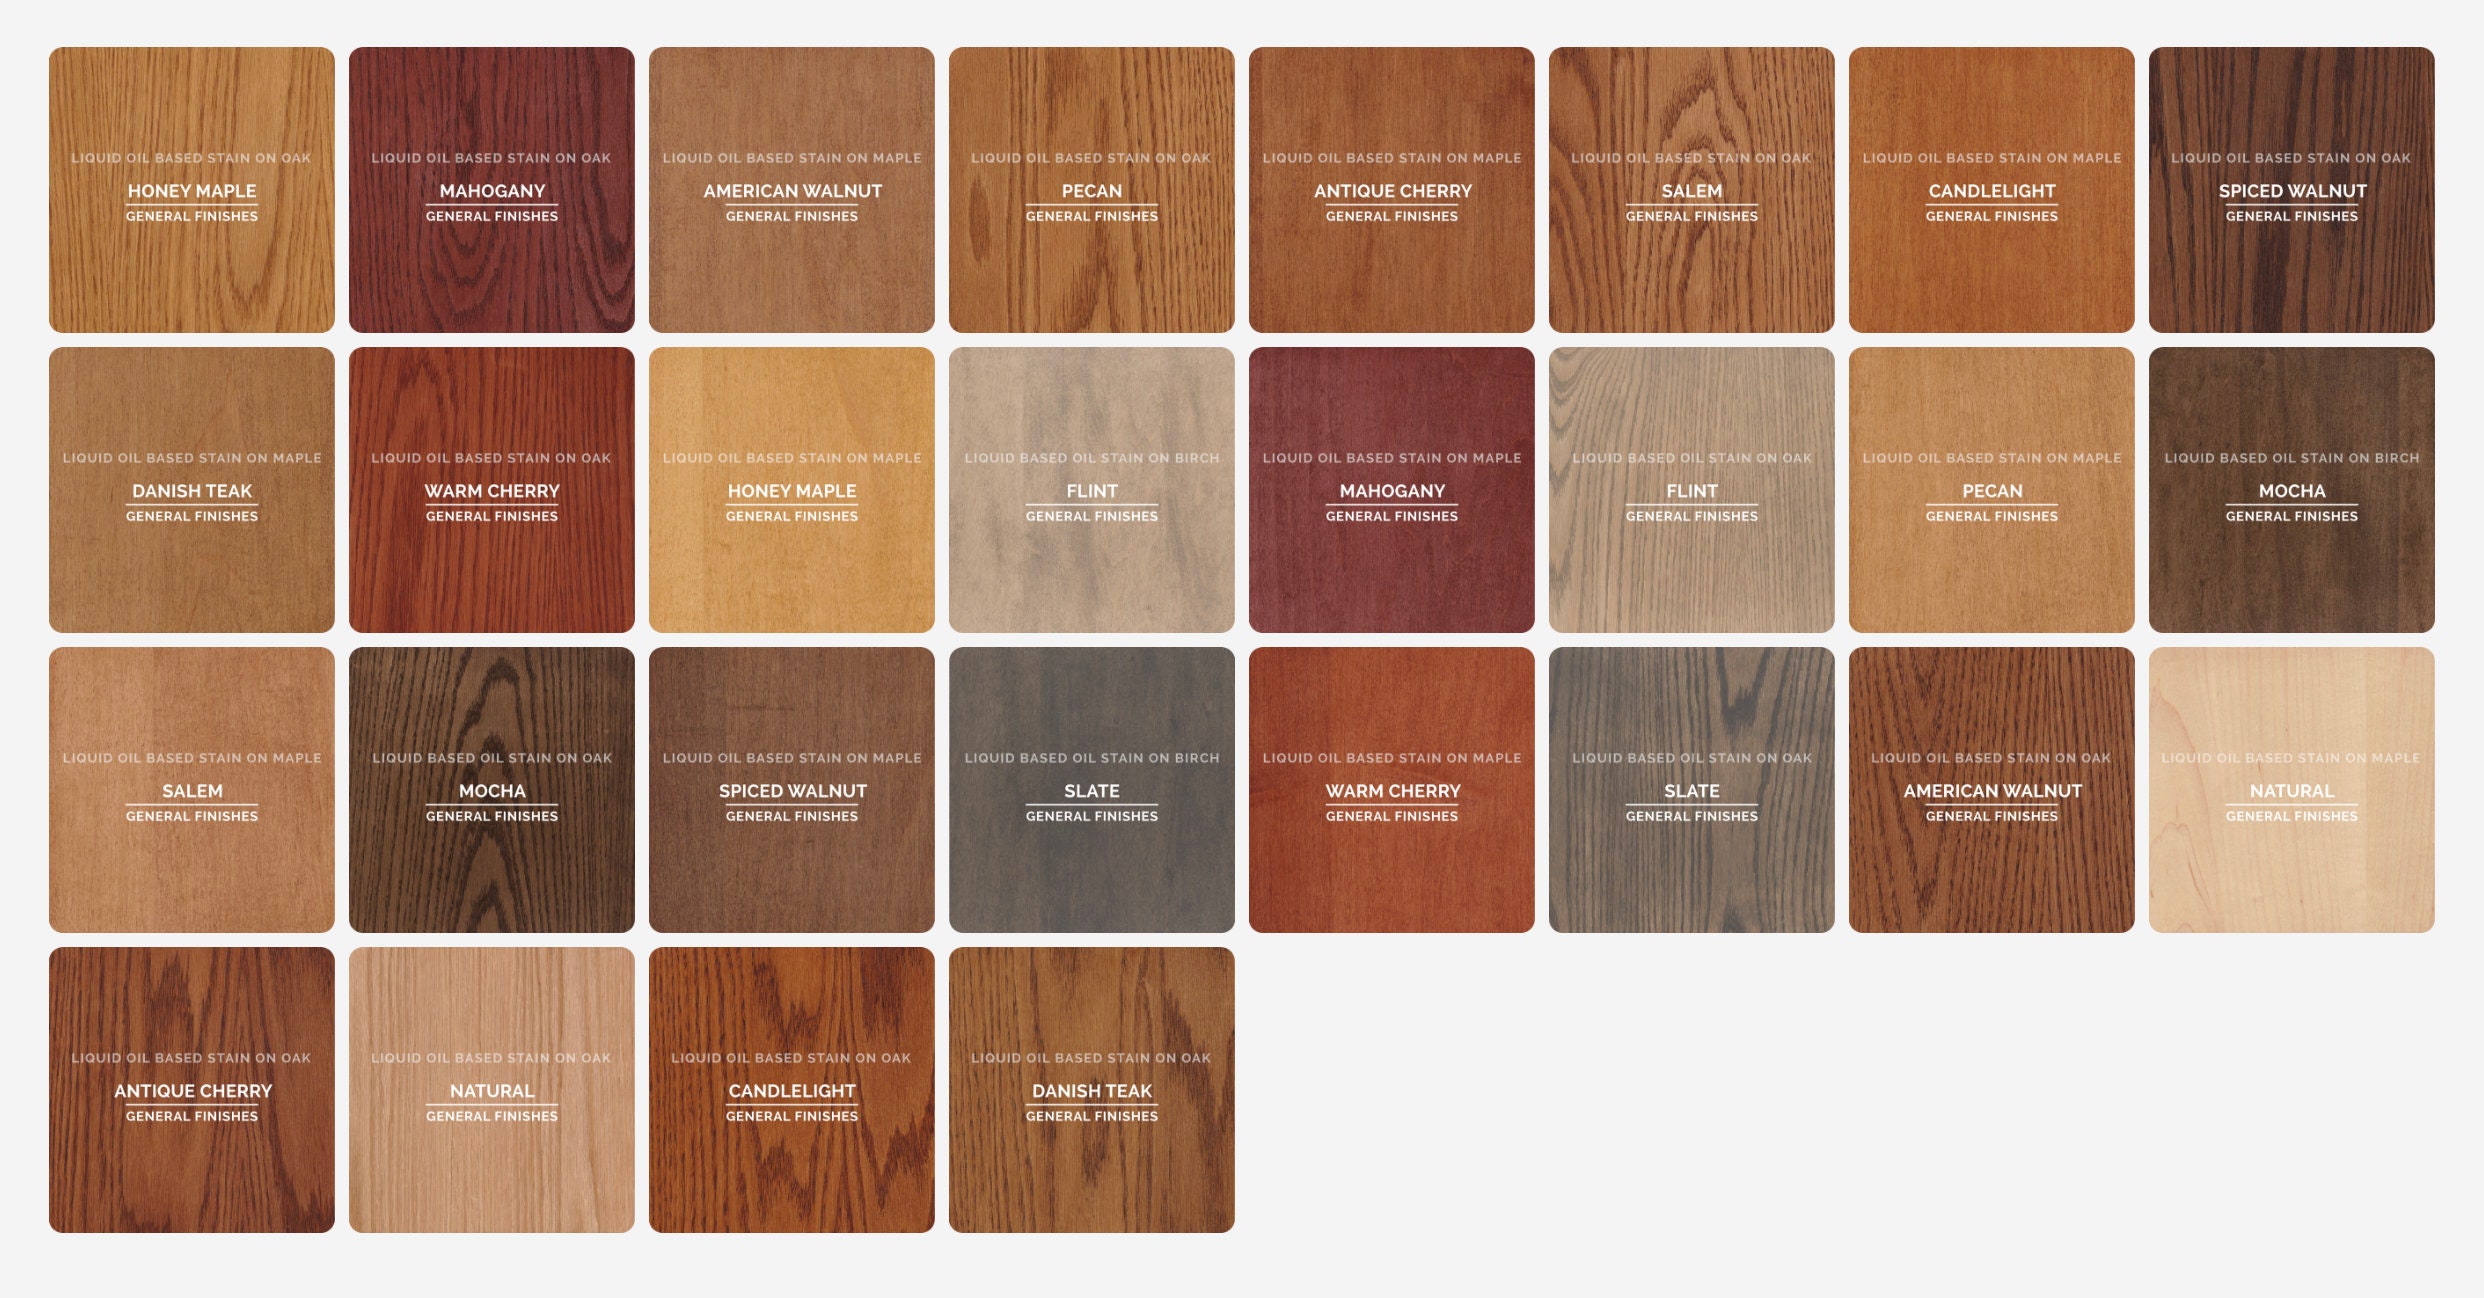 Keda Wood Dye Five Wood Dye Colors Kit Makes Vibrant Wood Stain to